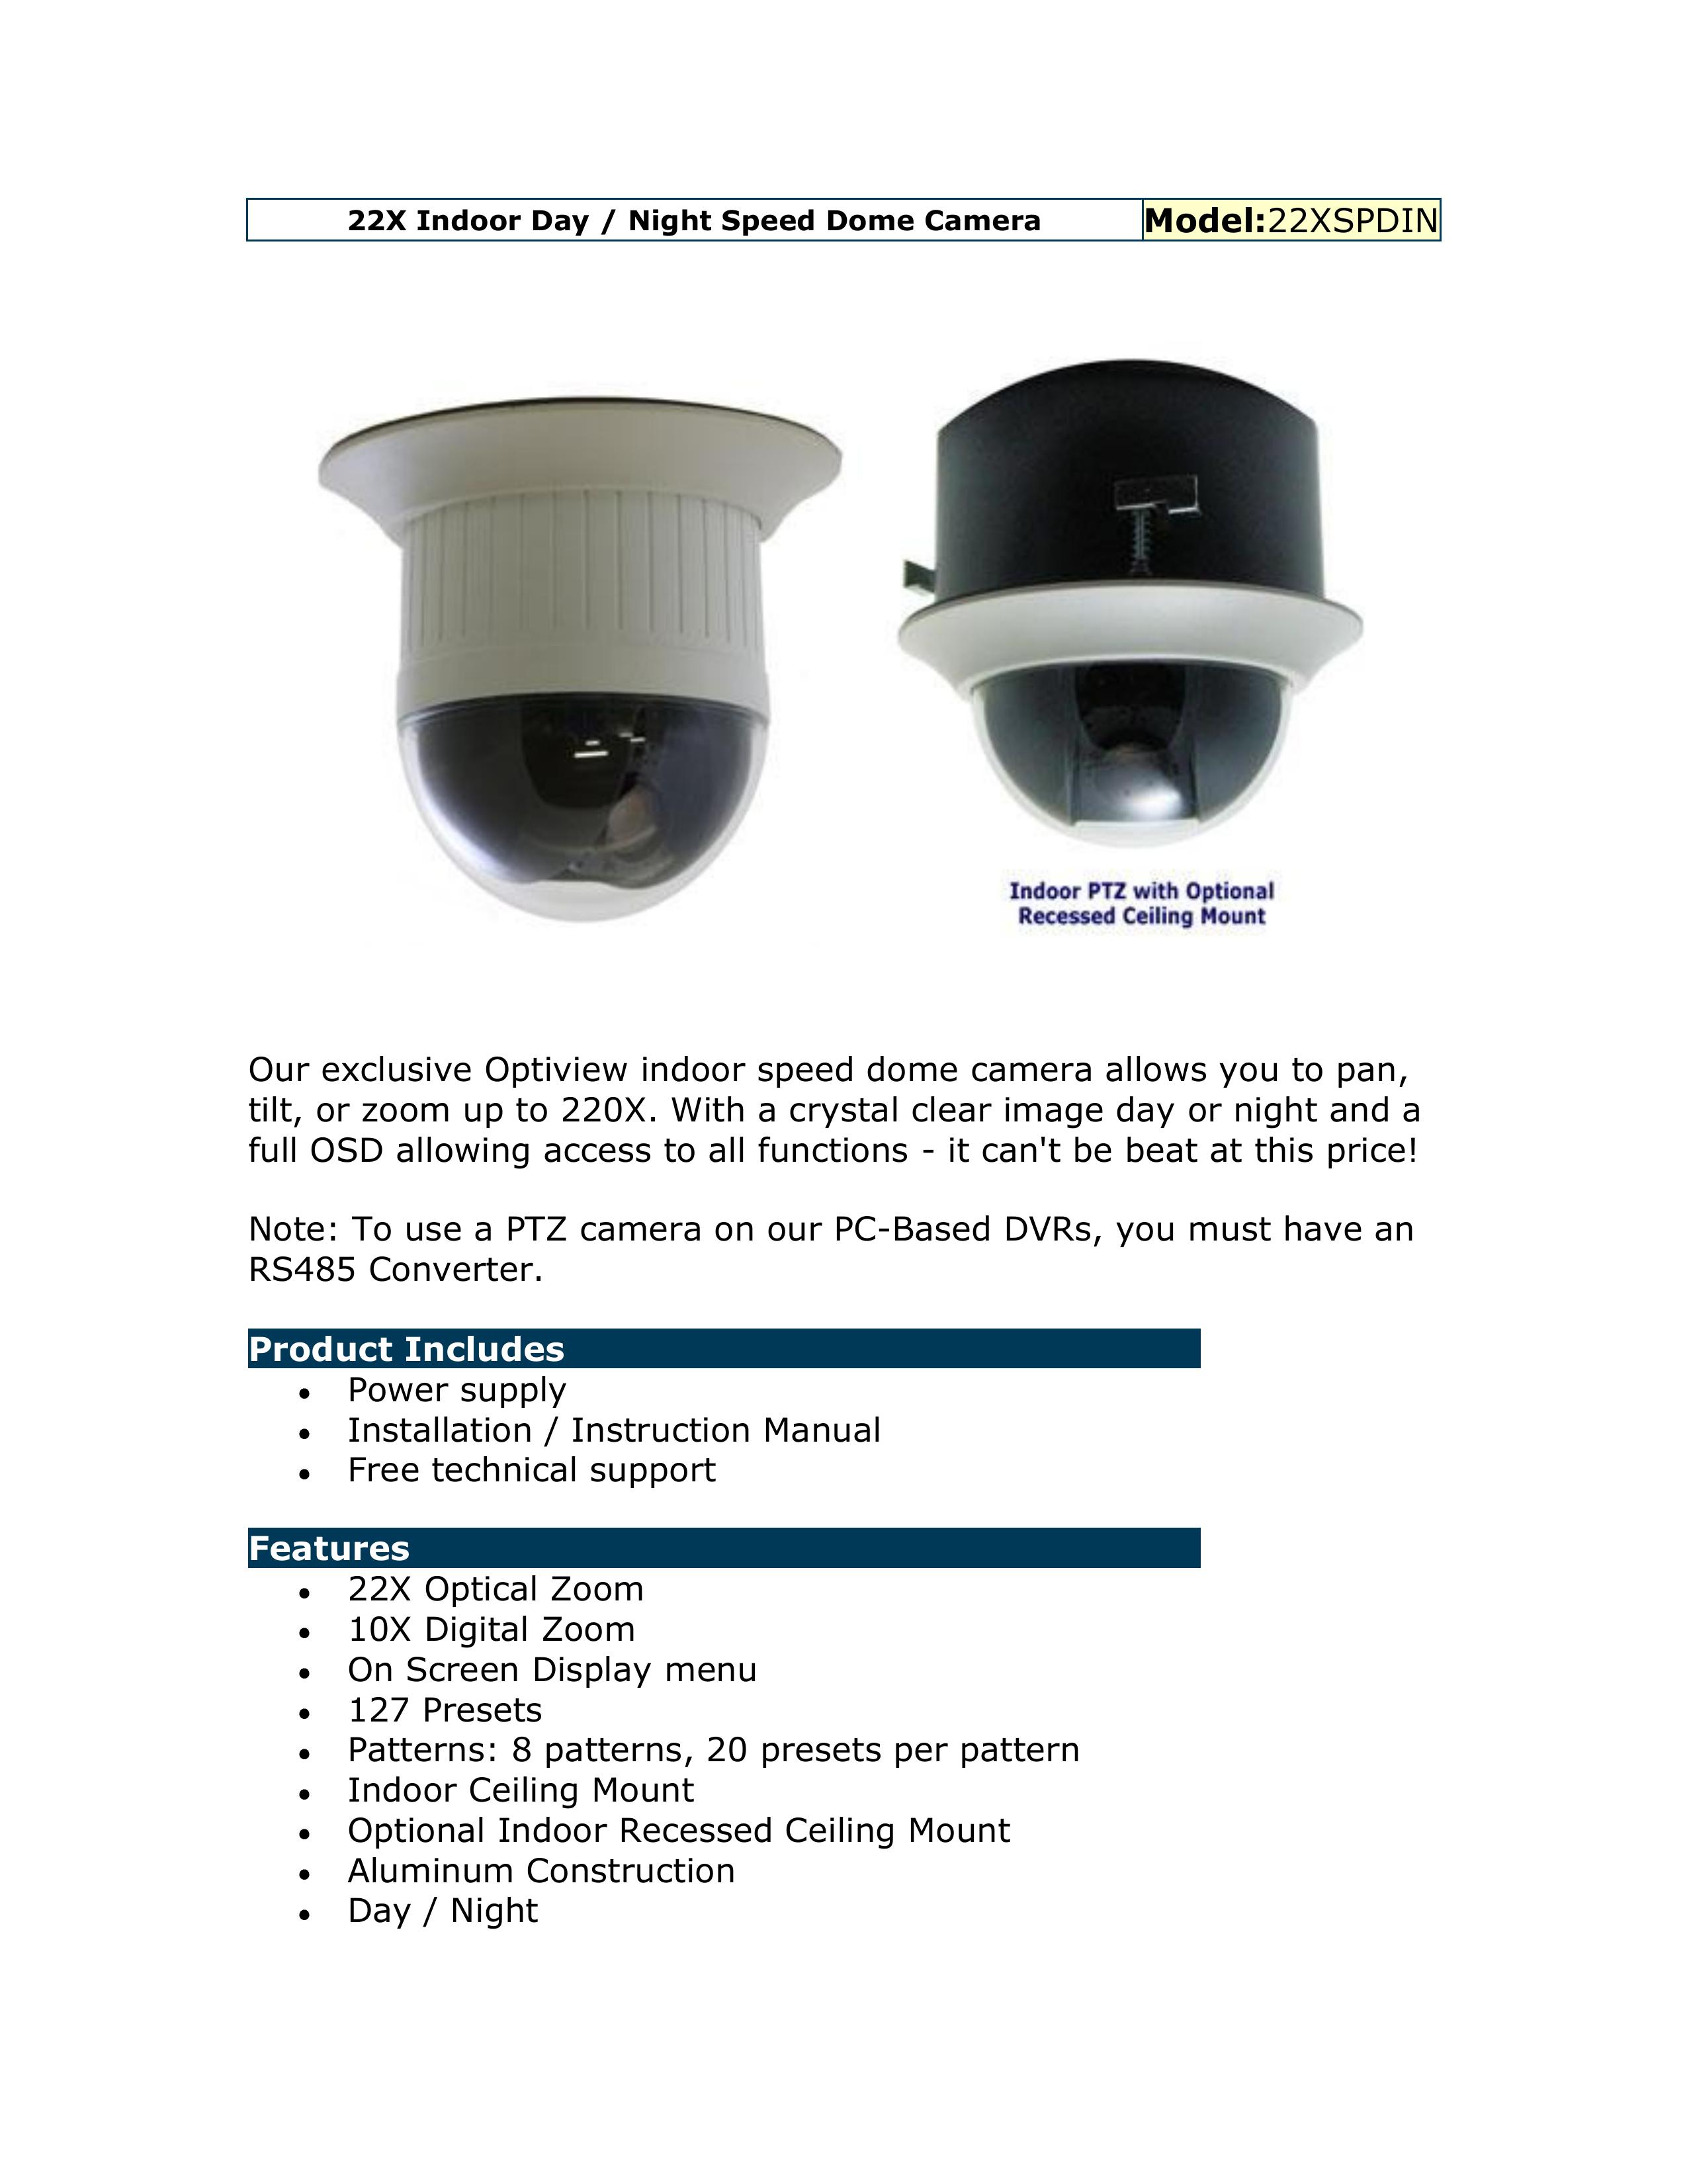 Optiview 22XSPDIN Security Camera User Manual